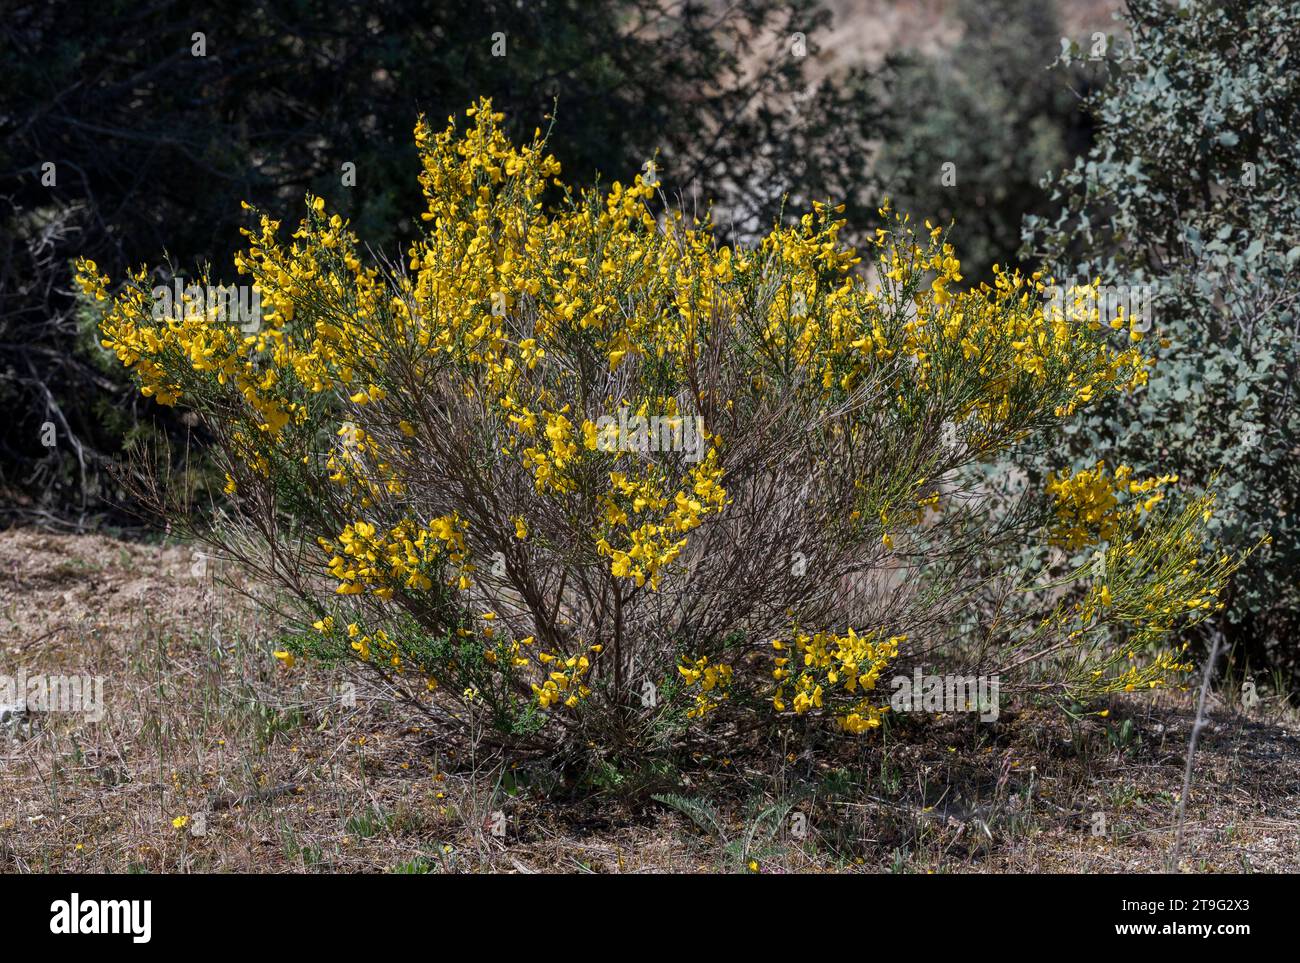 Common broom, Cytisus scoparius. Photo taken in Colmenar Viejo, Madrid, Spain Stock Photo